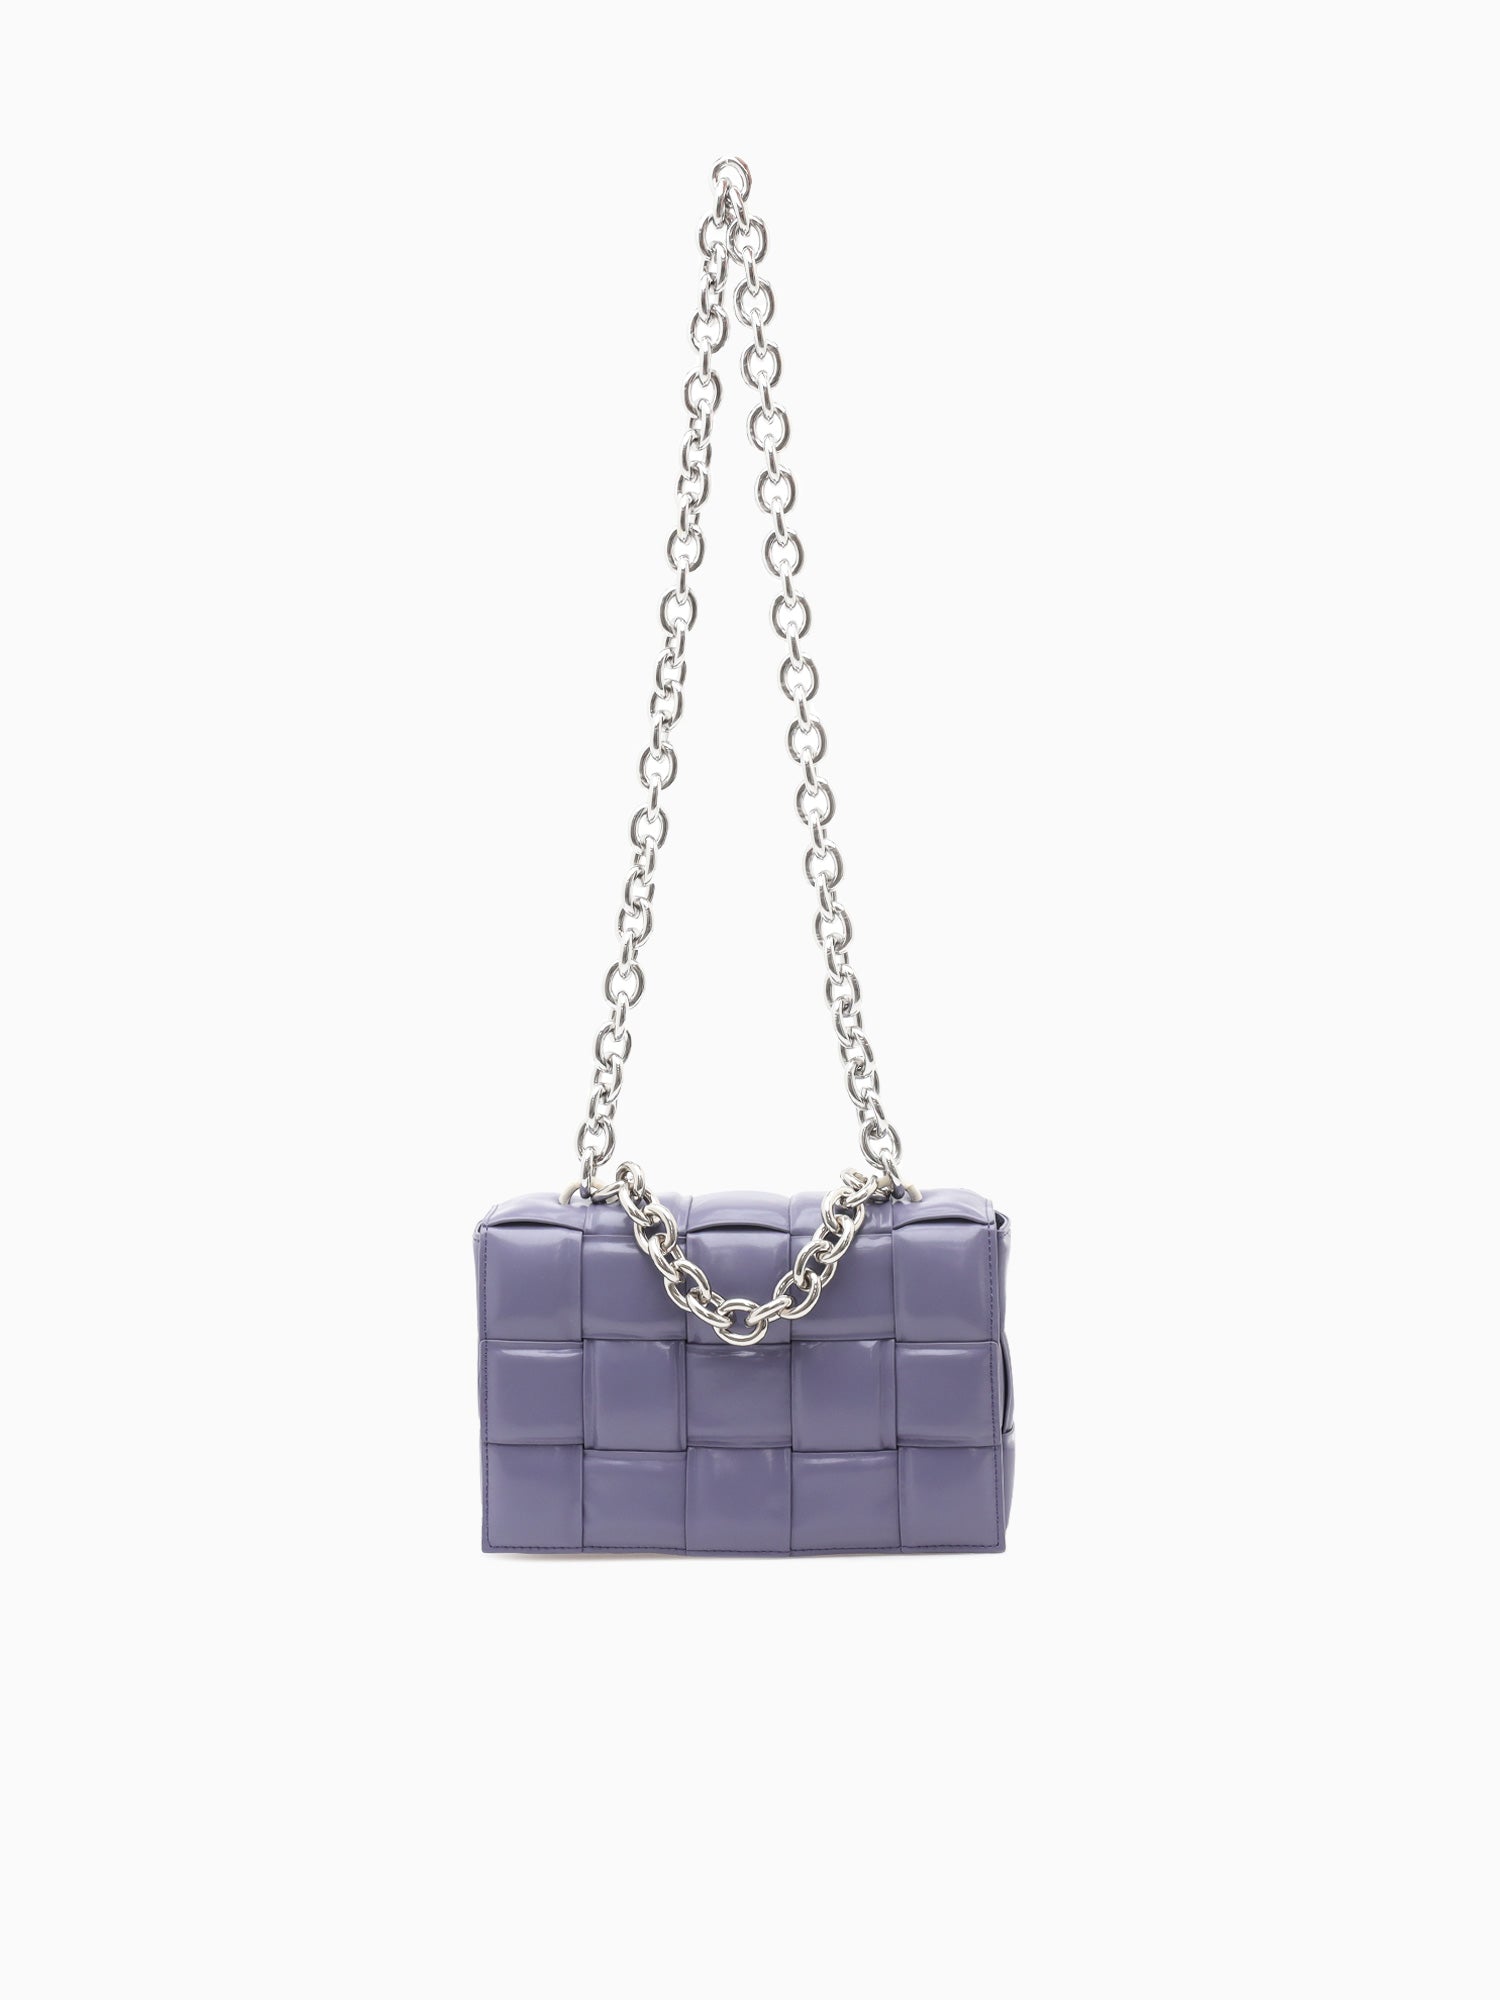 9942 Lg Chain Flap Bag Light Purple Light Purple